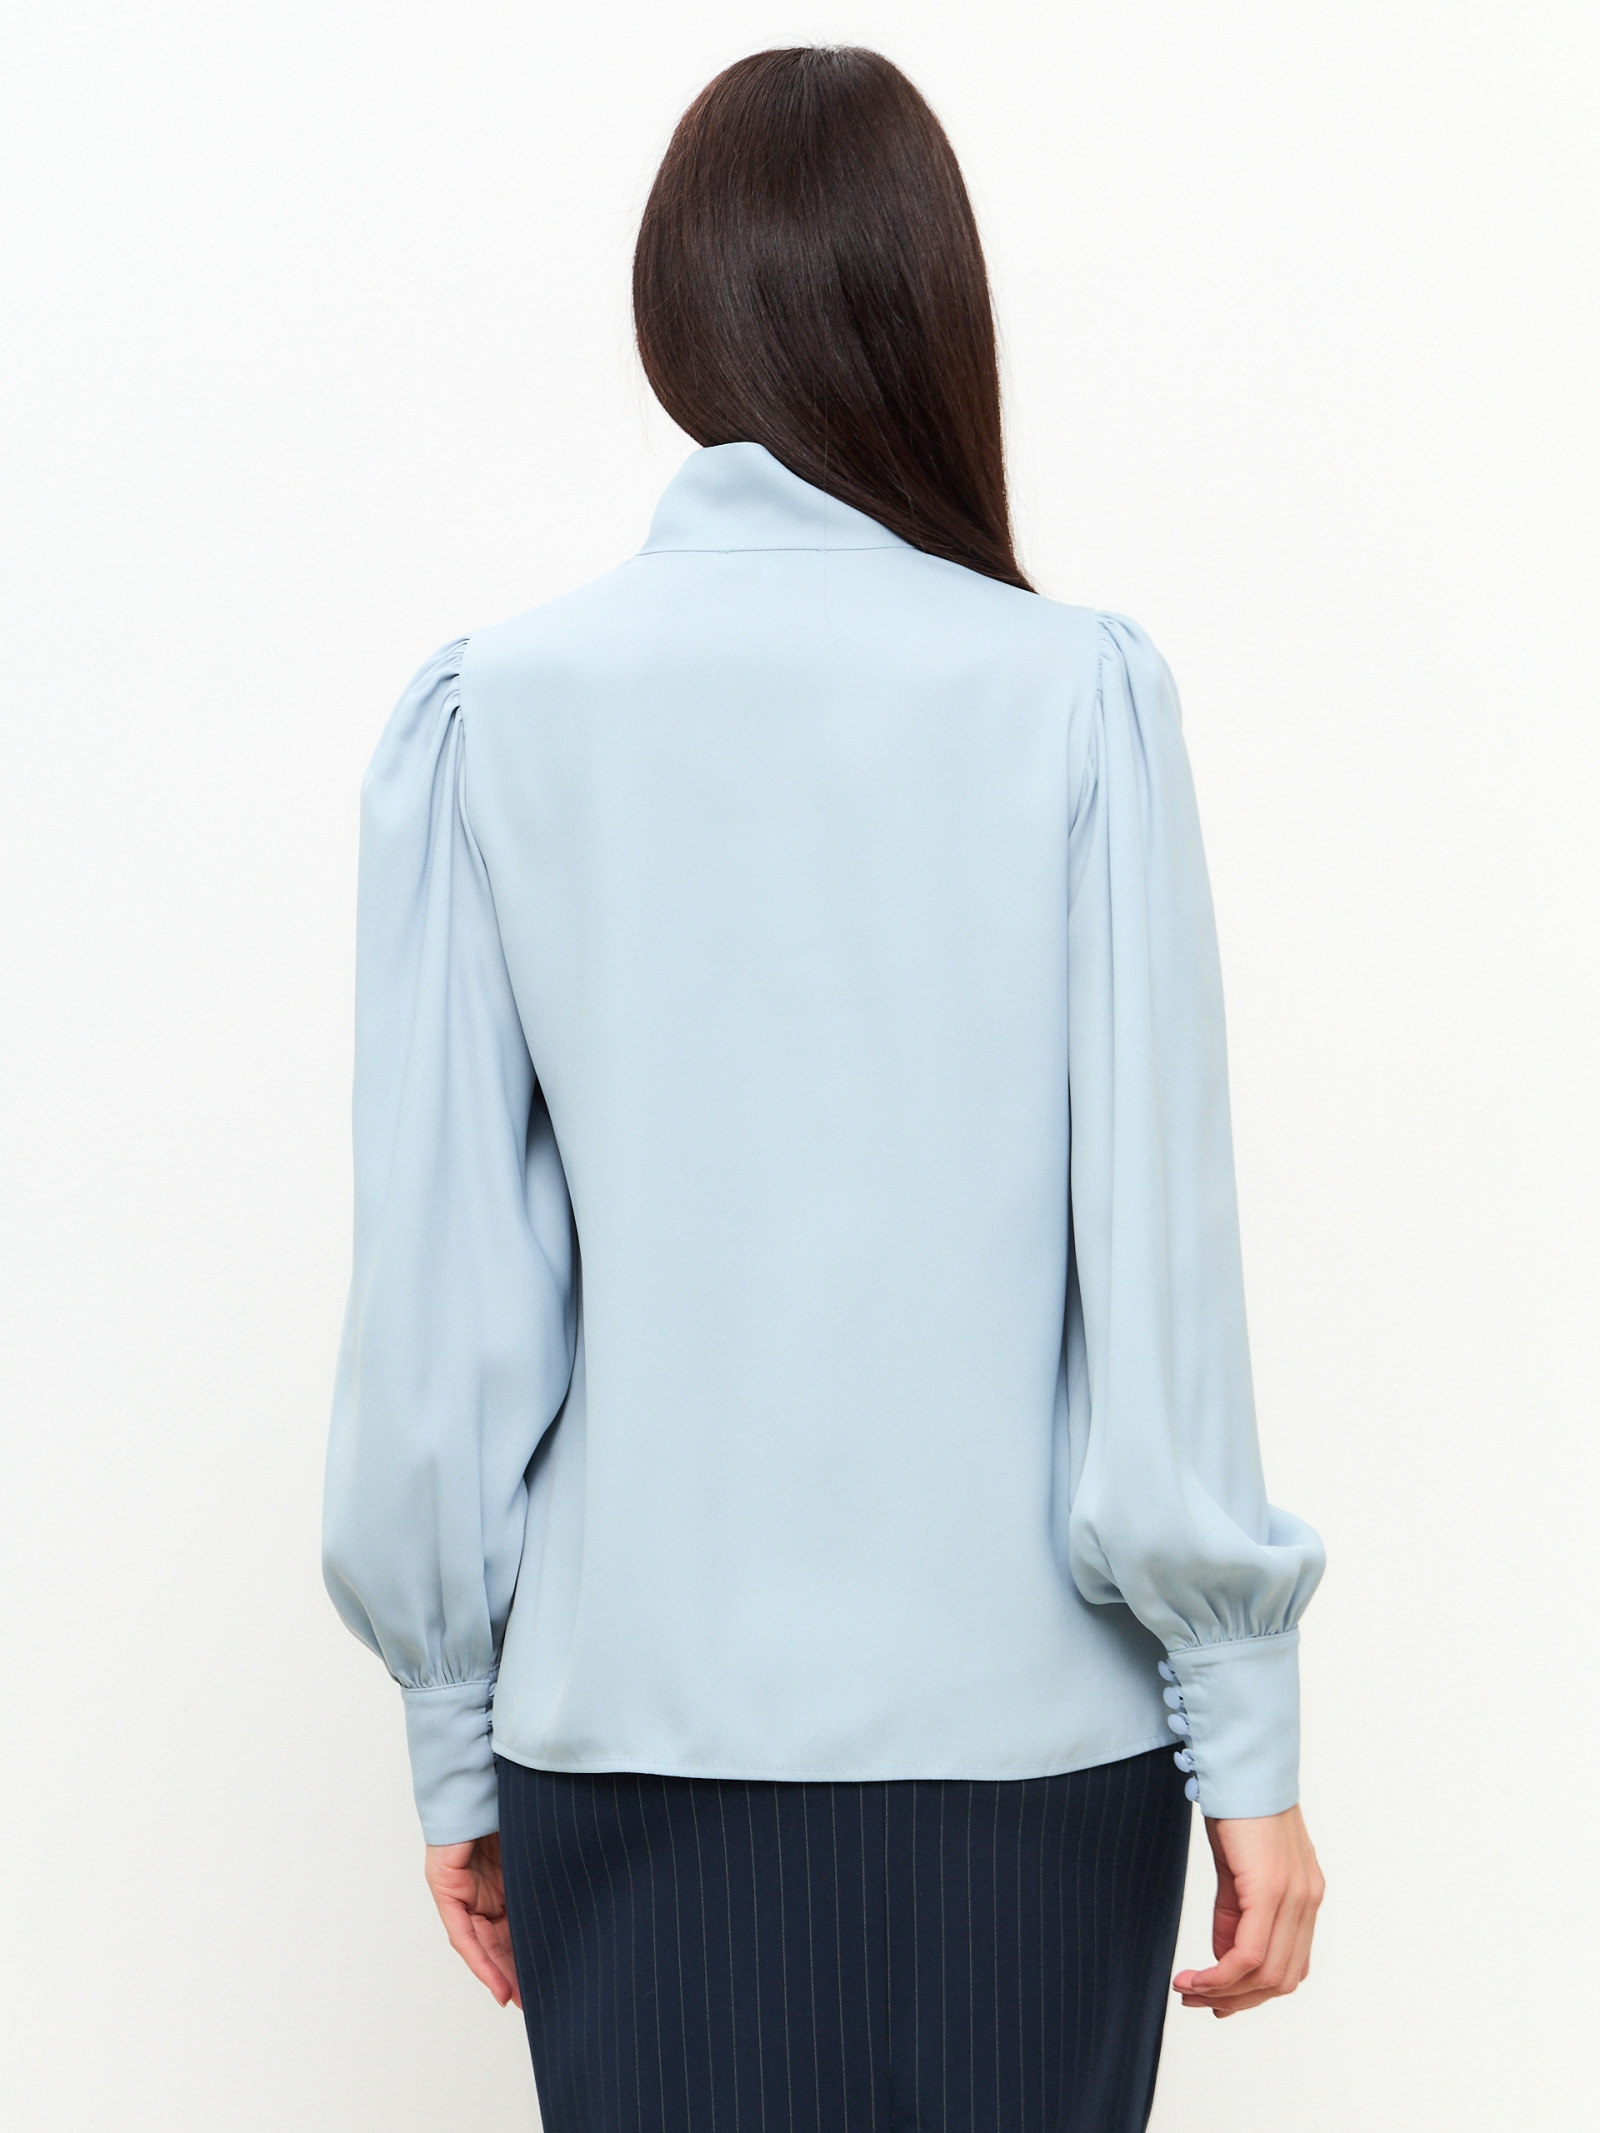 Блуза-косоворотка много пуговиц OD-550-9-серо-голубая